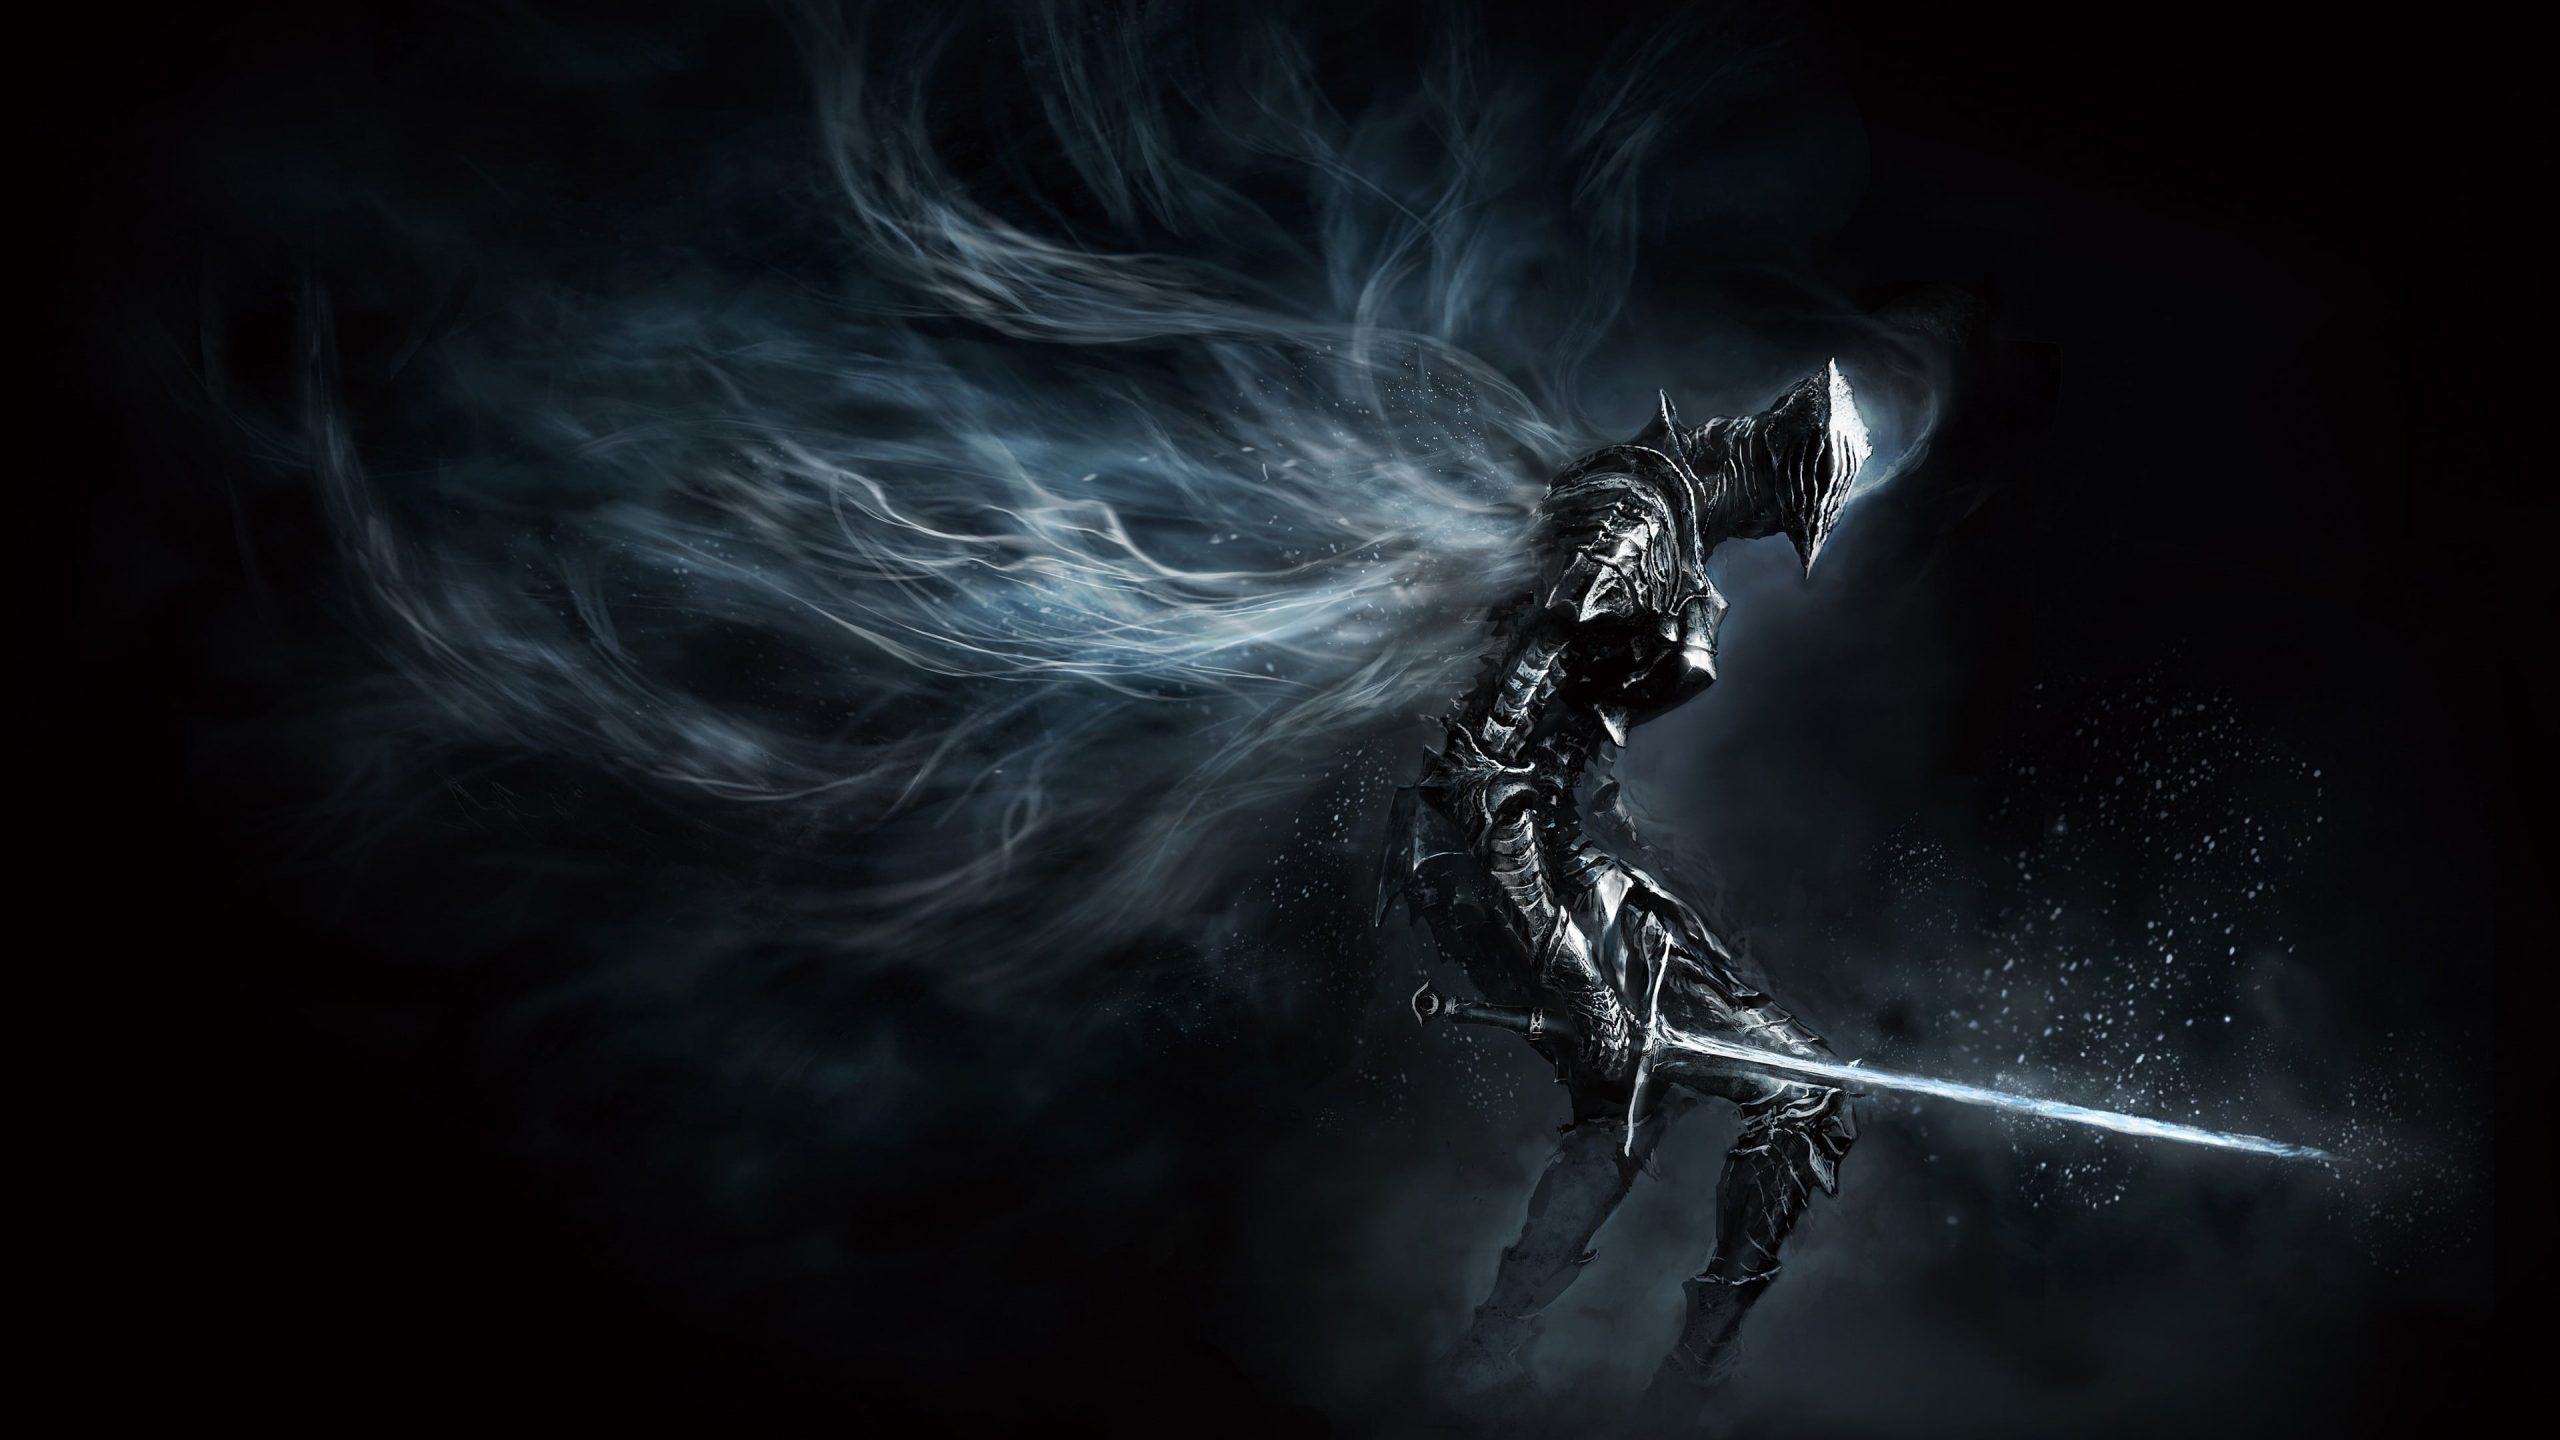 Wallpaper Dark Souls game illustration, character holding sword poster